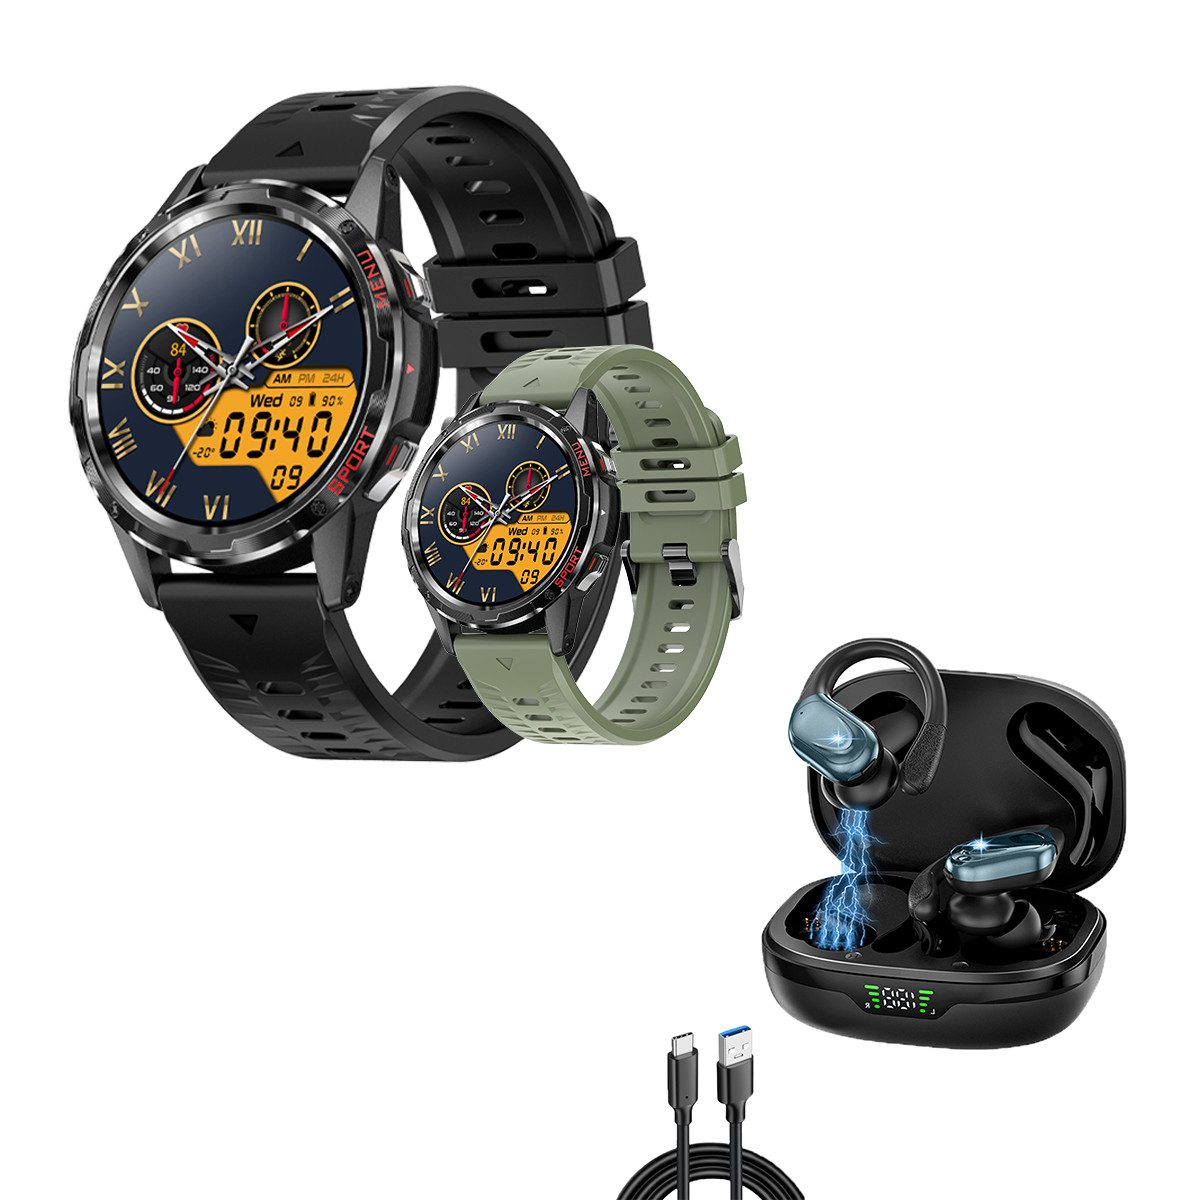 HYIEAR Smartwatch, 1,32-Zoll-Touchscreen, IP67, Bluetooth 5.3-Chip Smartwatch (Android/iOS) Set, Wird mit UsB-Ladekabel geliefert. x, Sportarmbander, Touch Control, Woice Assistant.